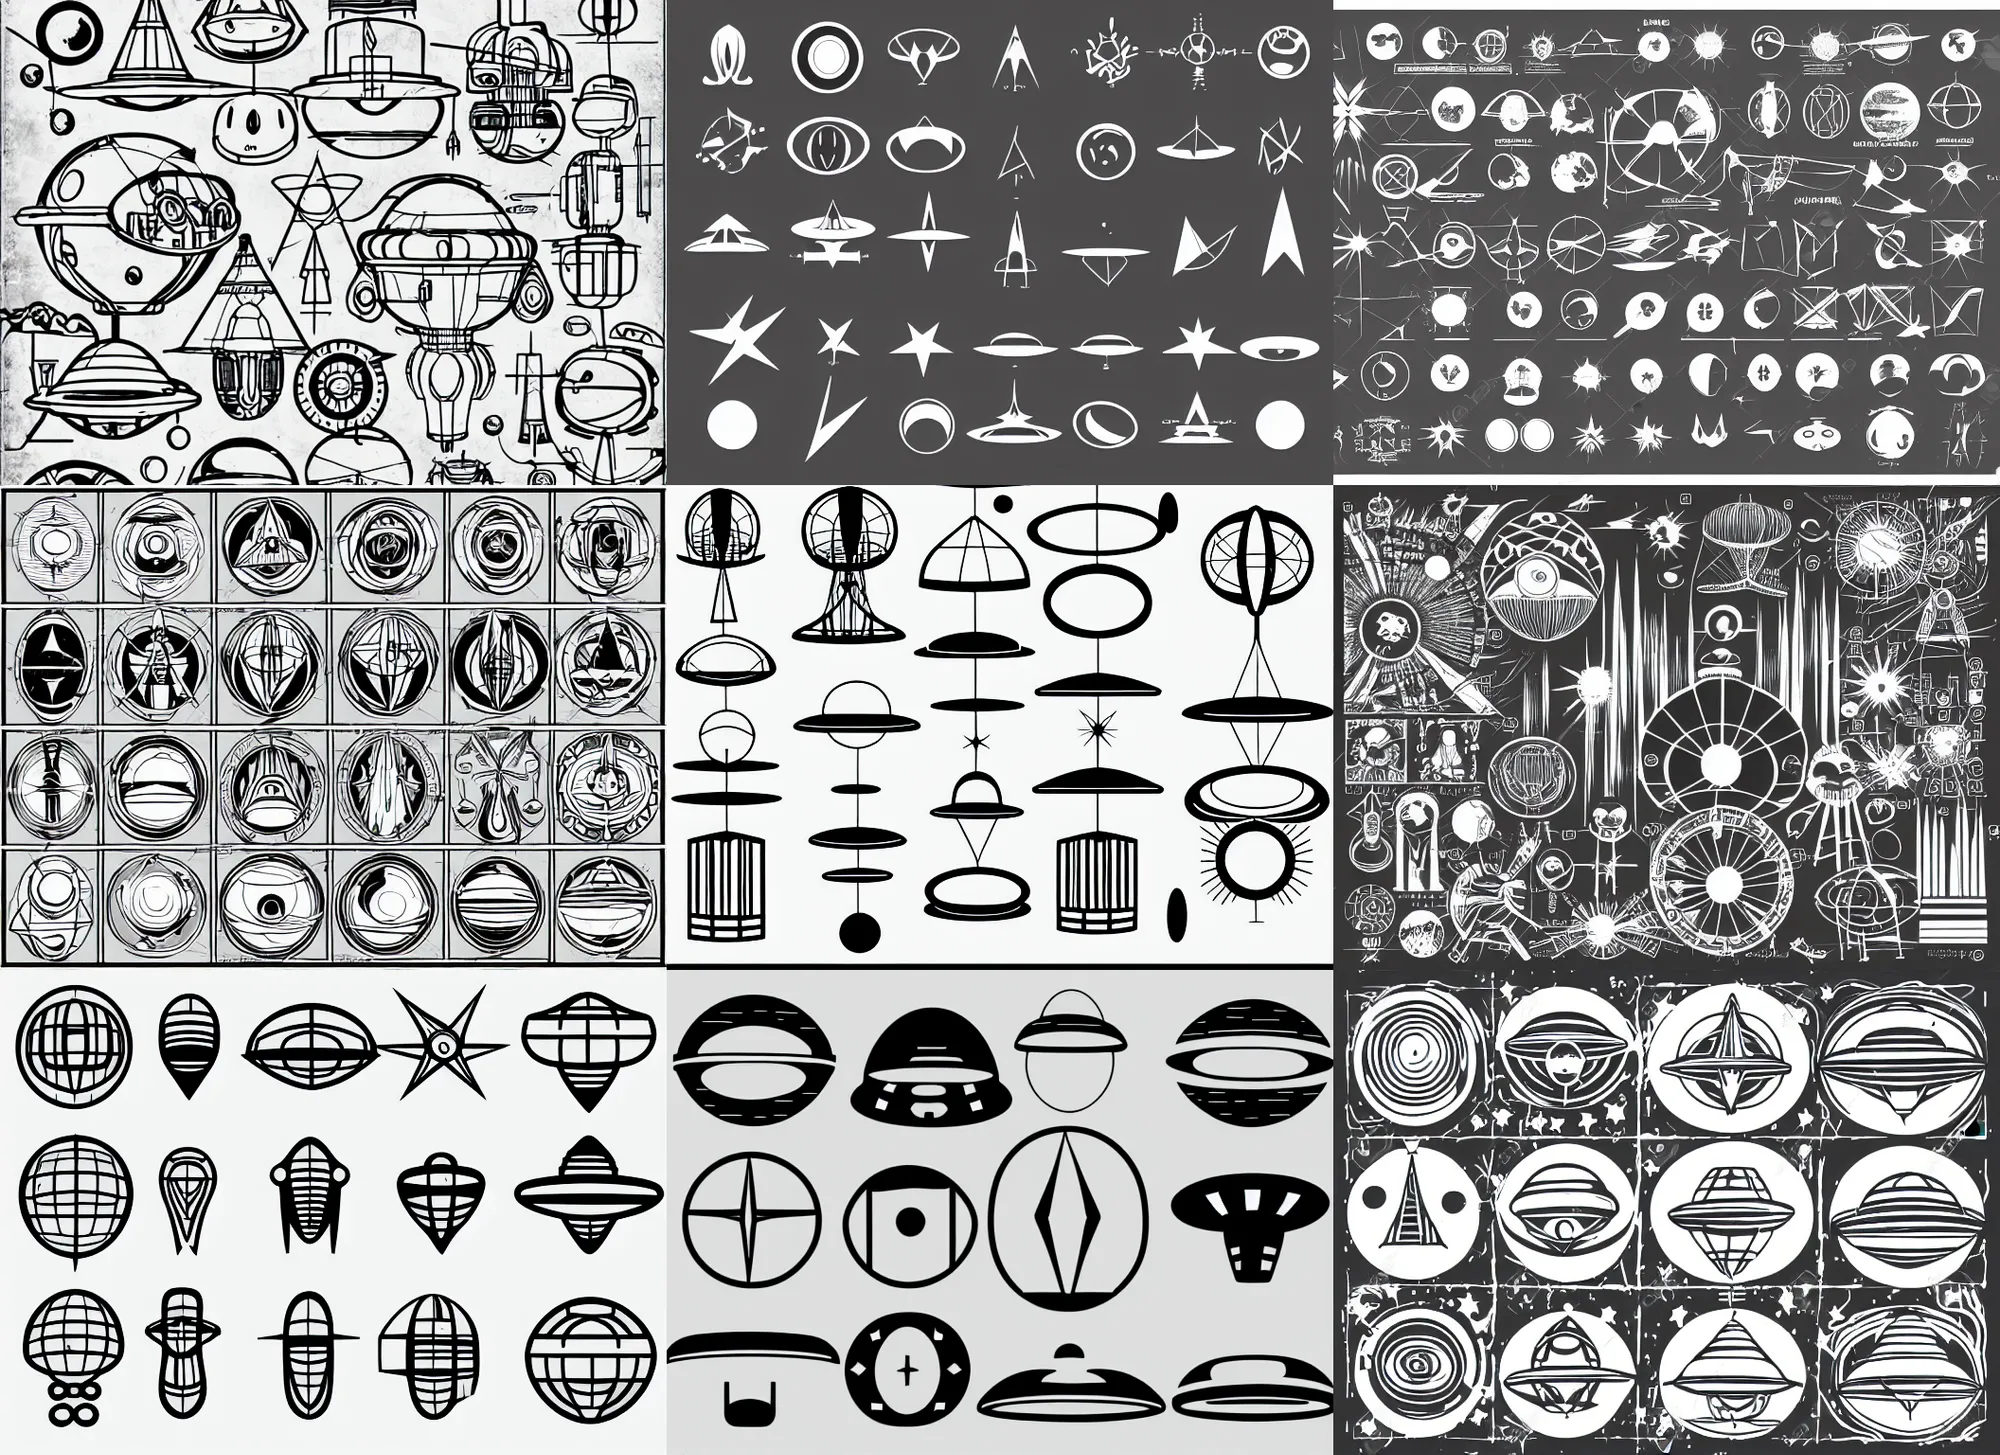 Prompt: spiritual ufo diagram clean shapes by bauhaus sprite sheet, b & w, vector